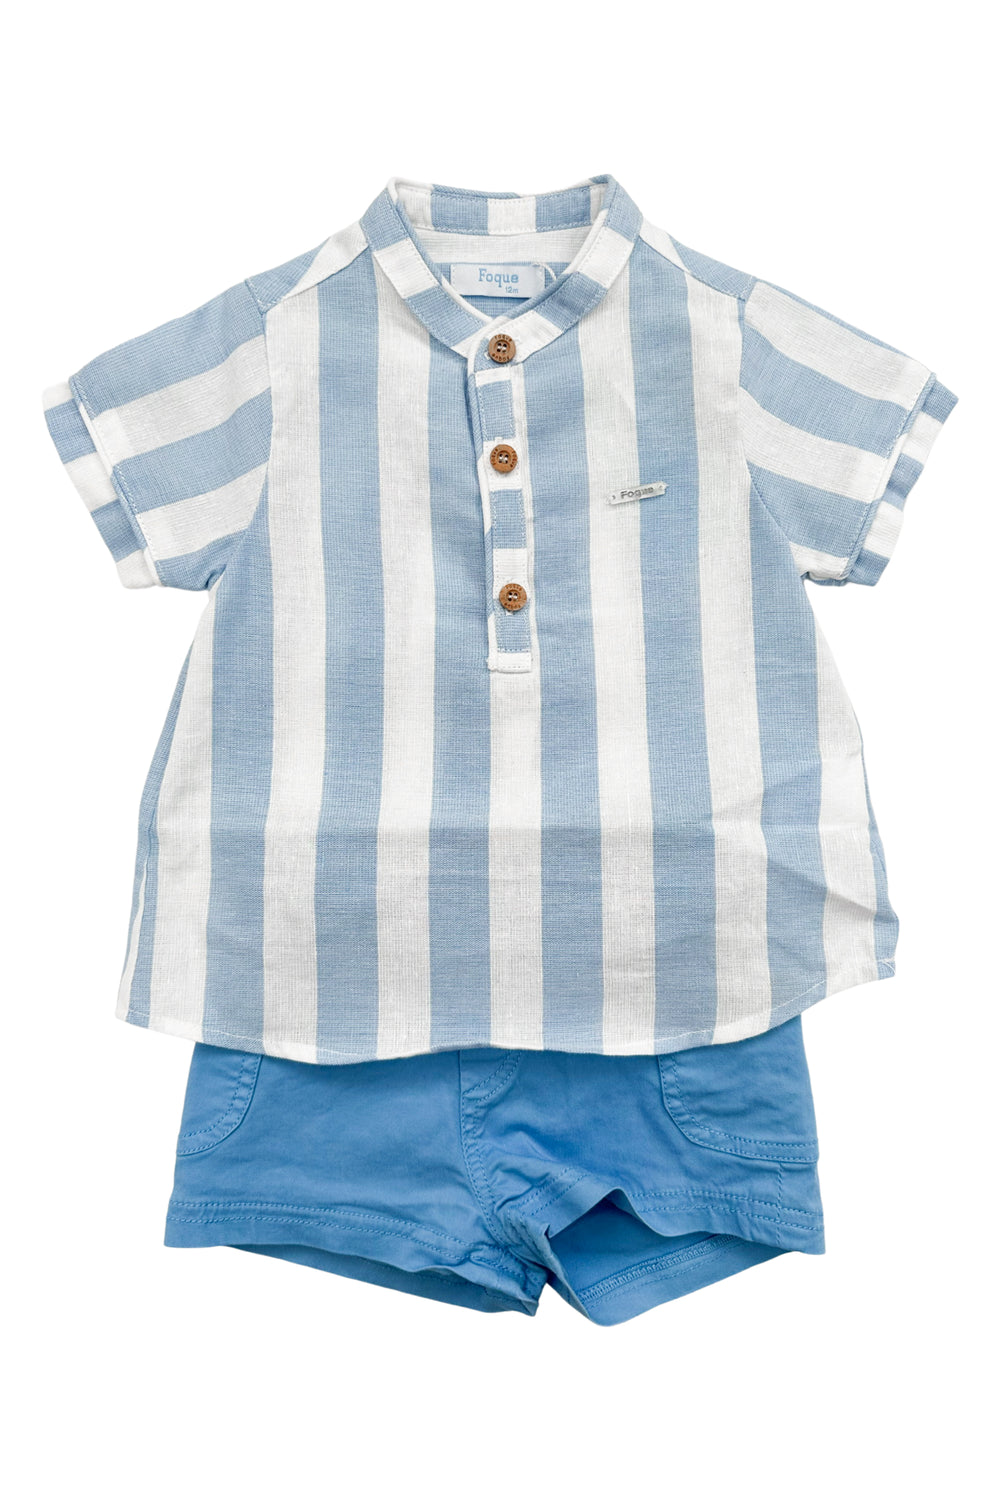 Foque PREORDER "Xavier" Sky Blue Striped Shirt & Shorts | iphoneandroidapplications